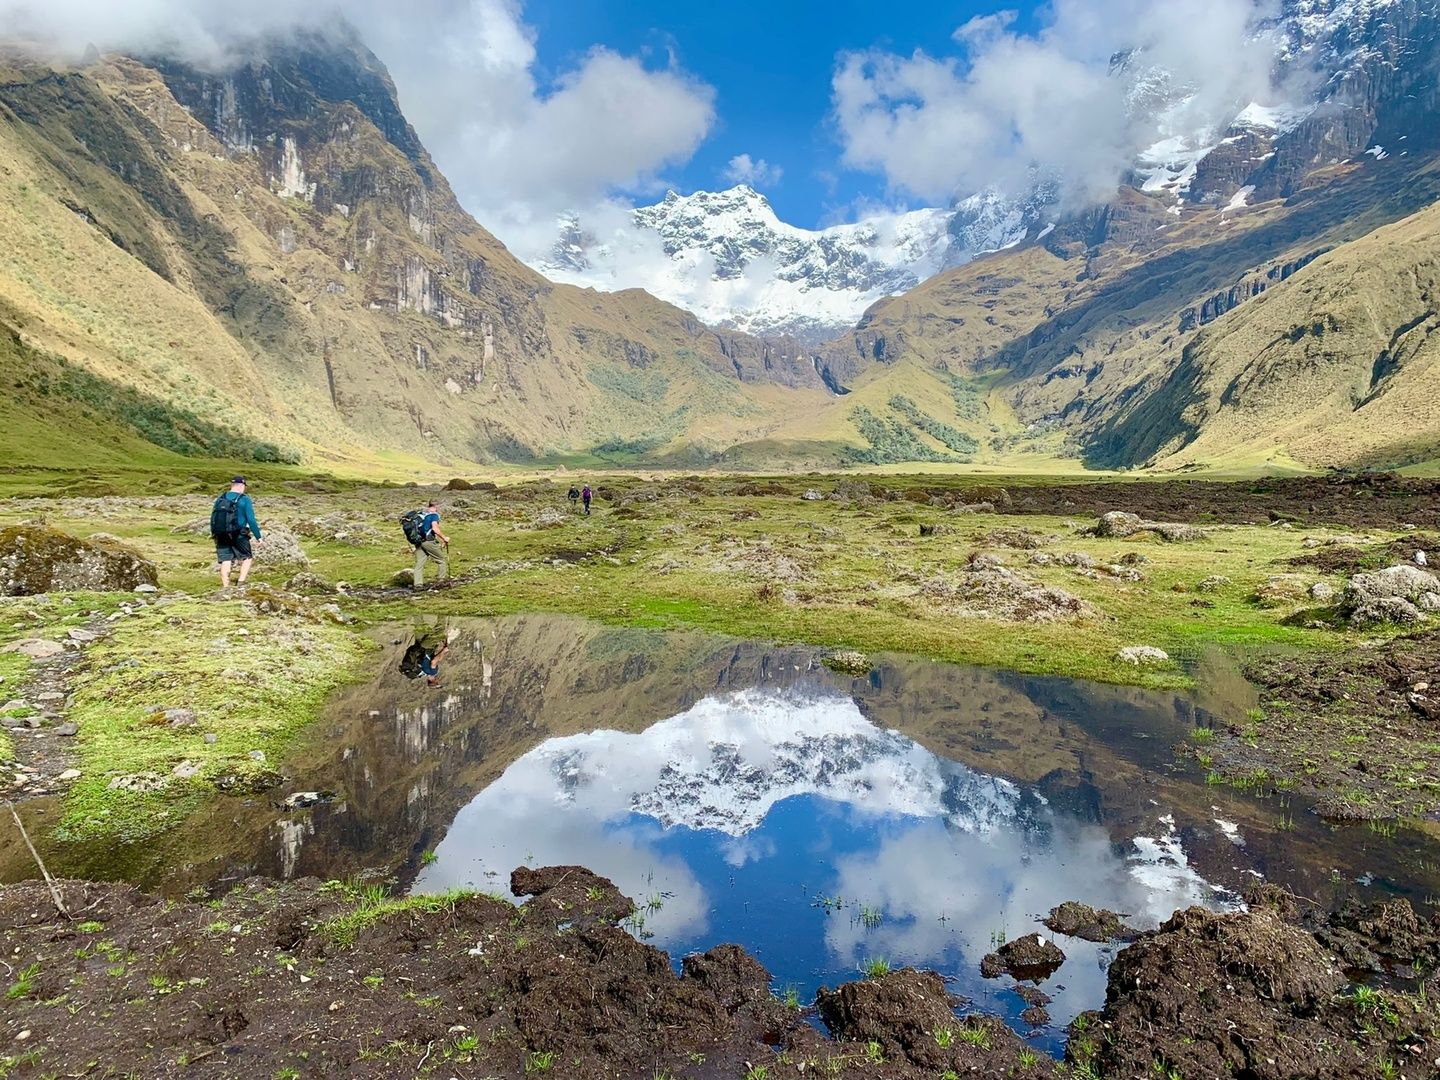 Two men trek past a lake in the Ecuadorian Andes.